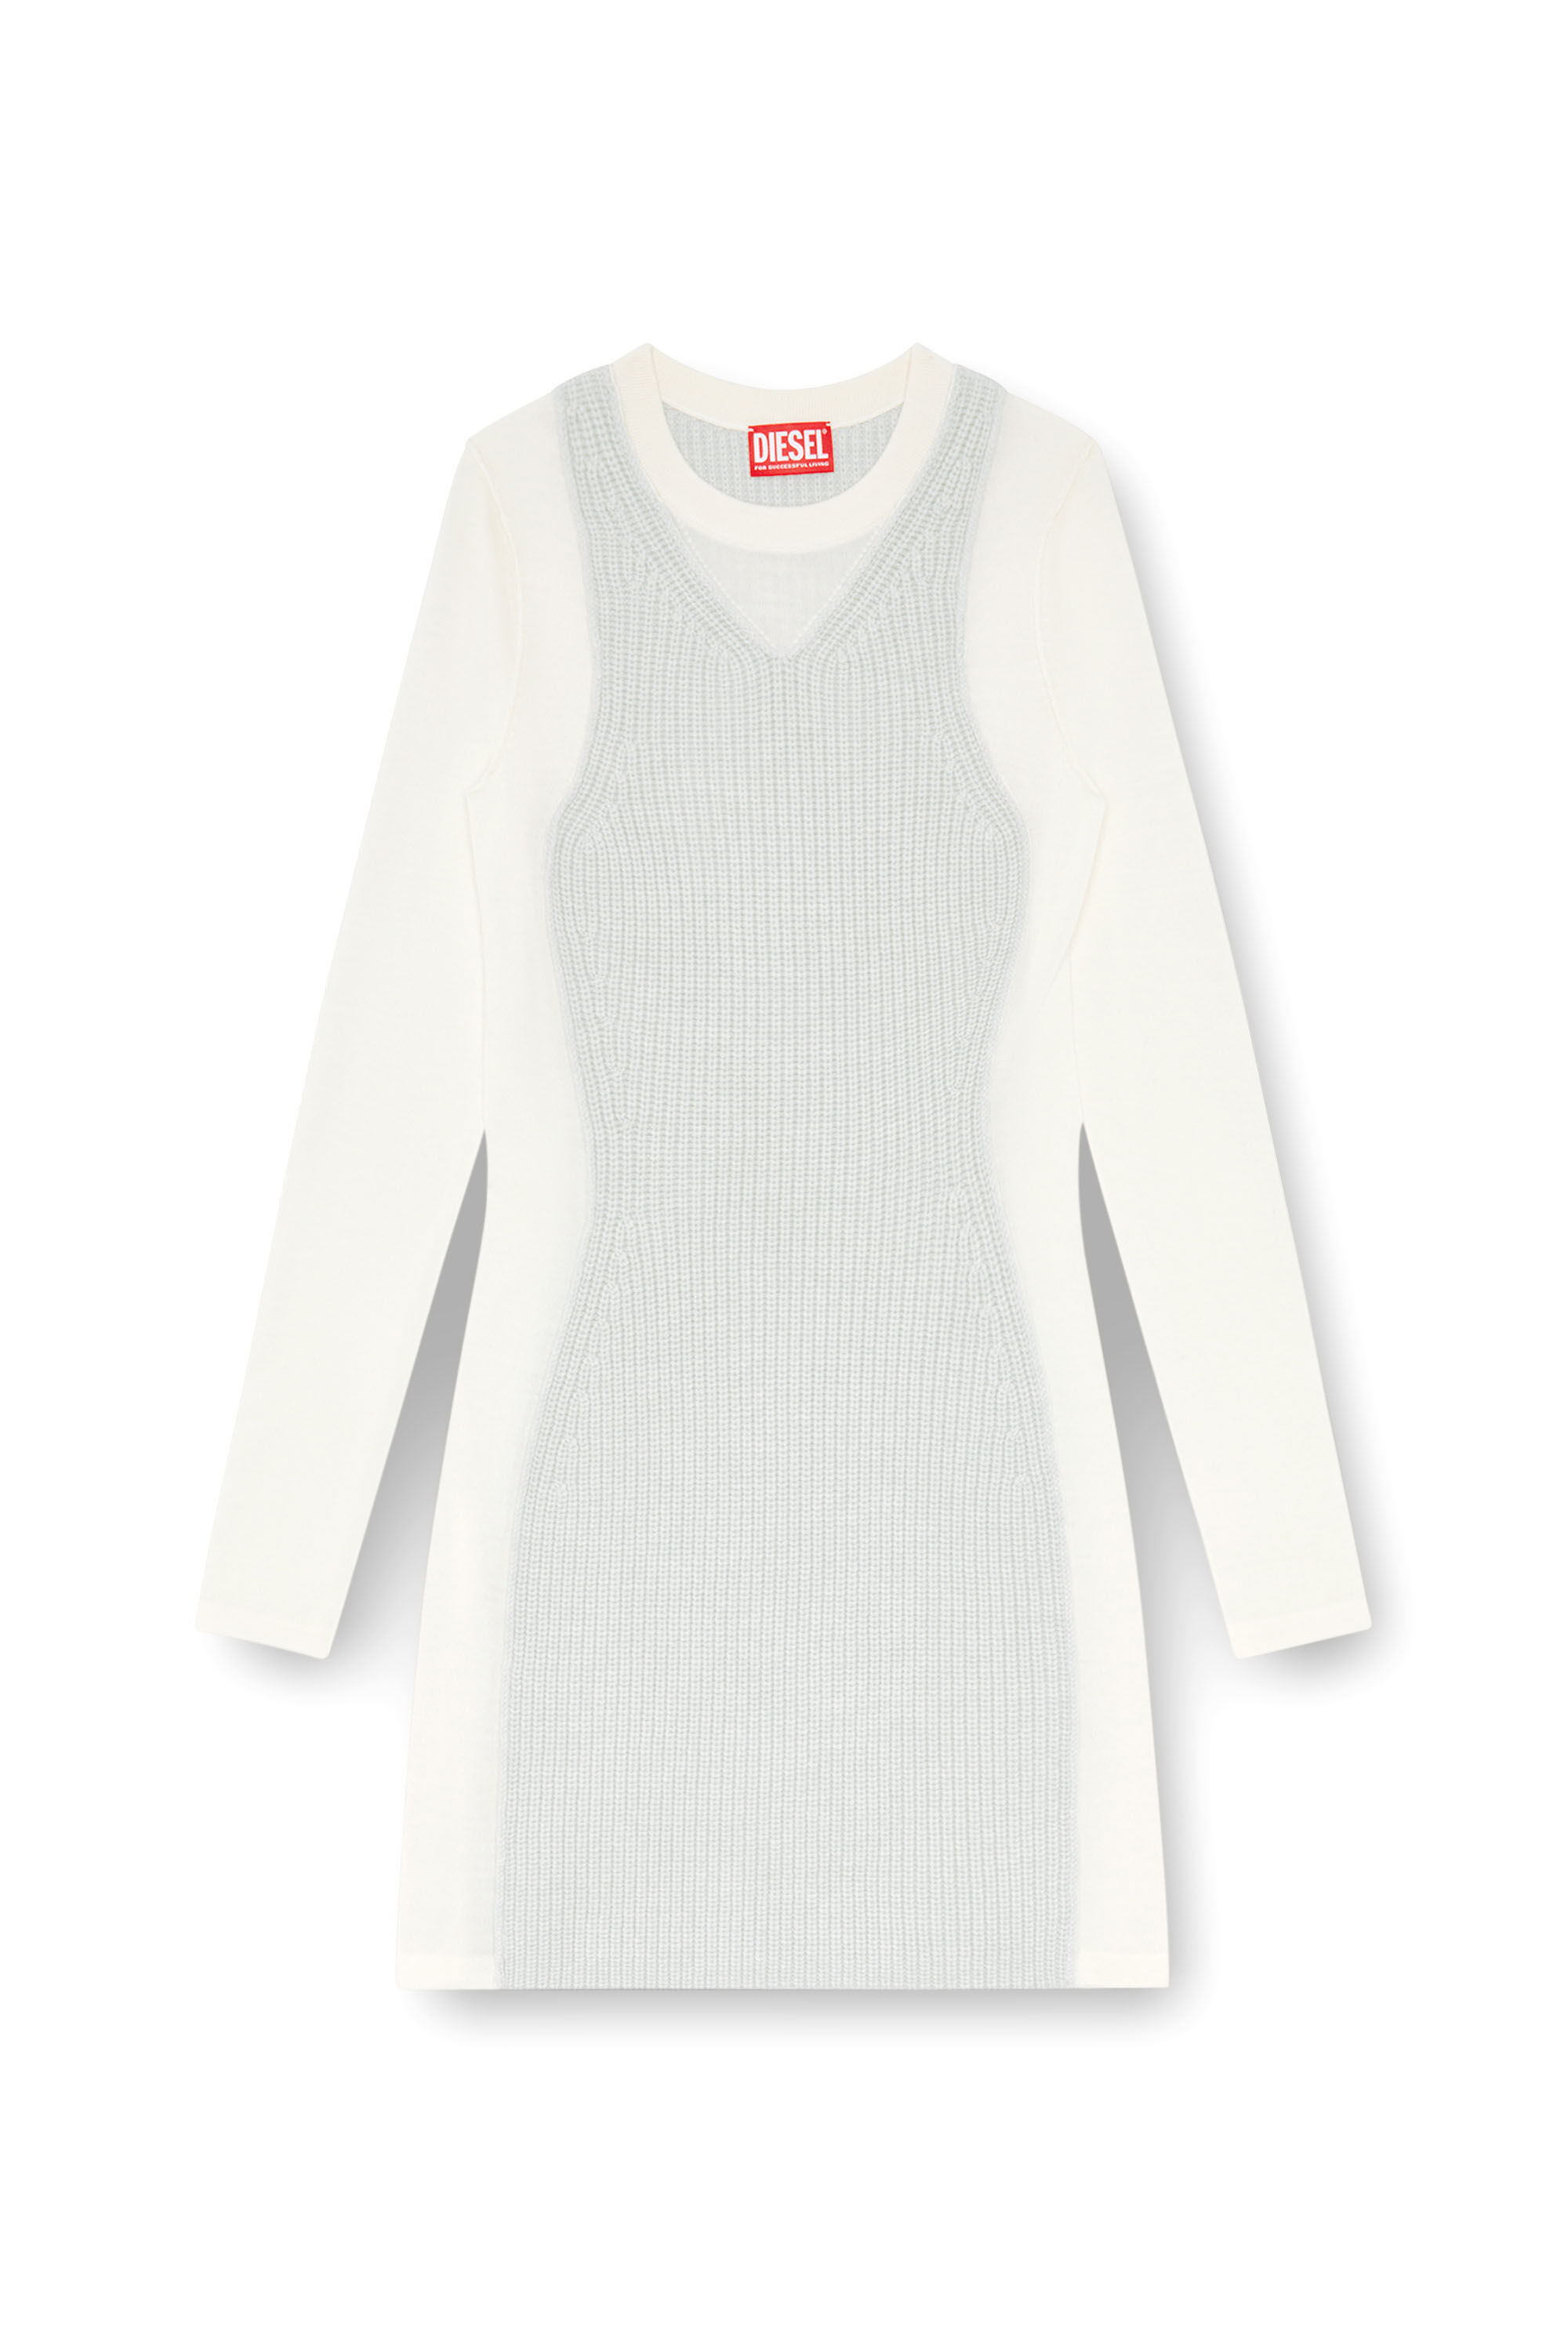 Diesel - M-ARENA, Femme Robe courte en maille à effet superposé in Blanc - Image 2